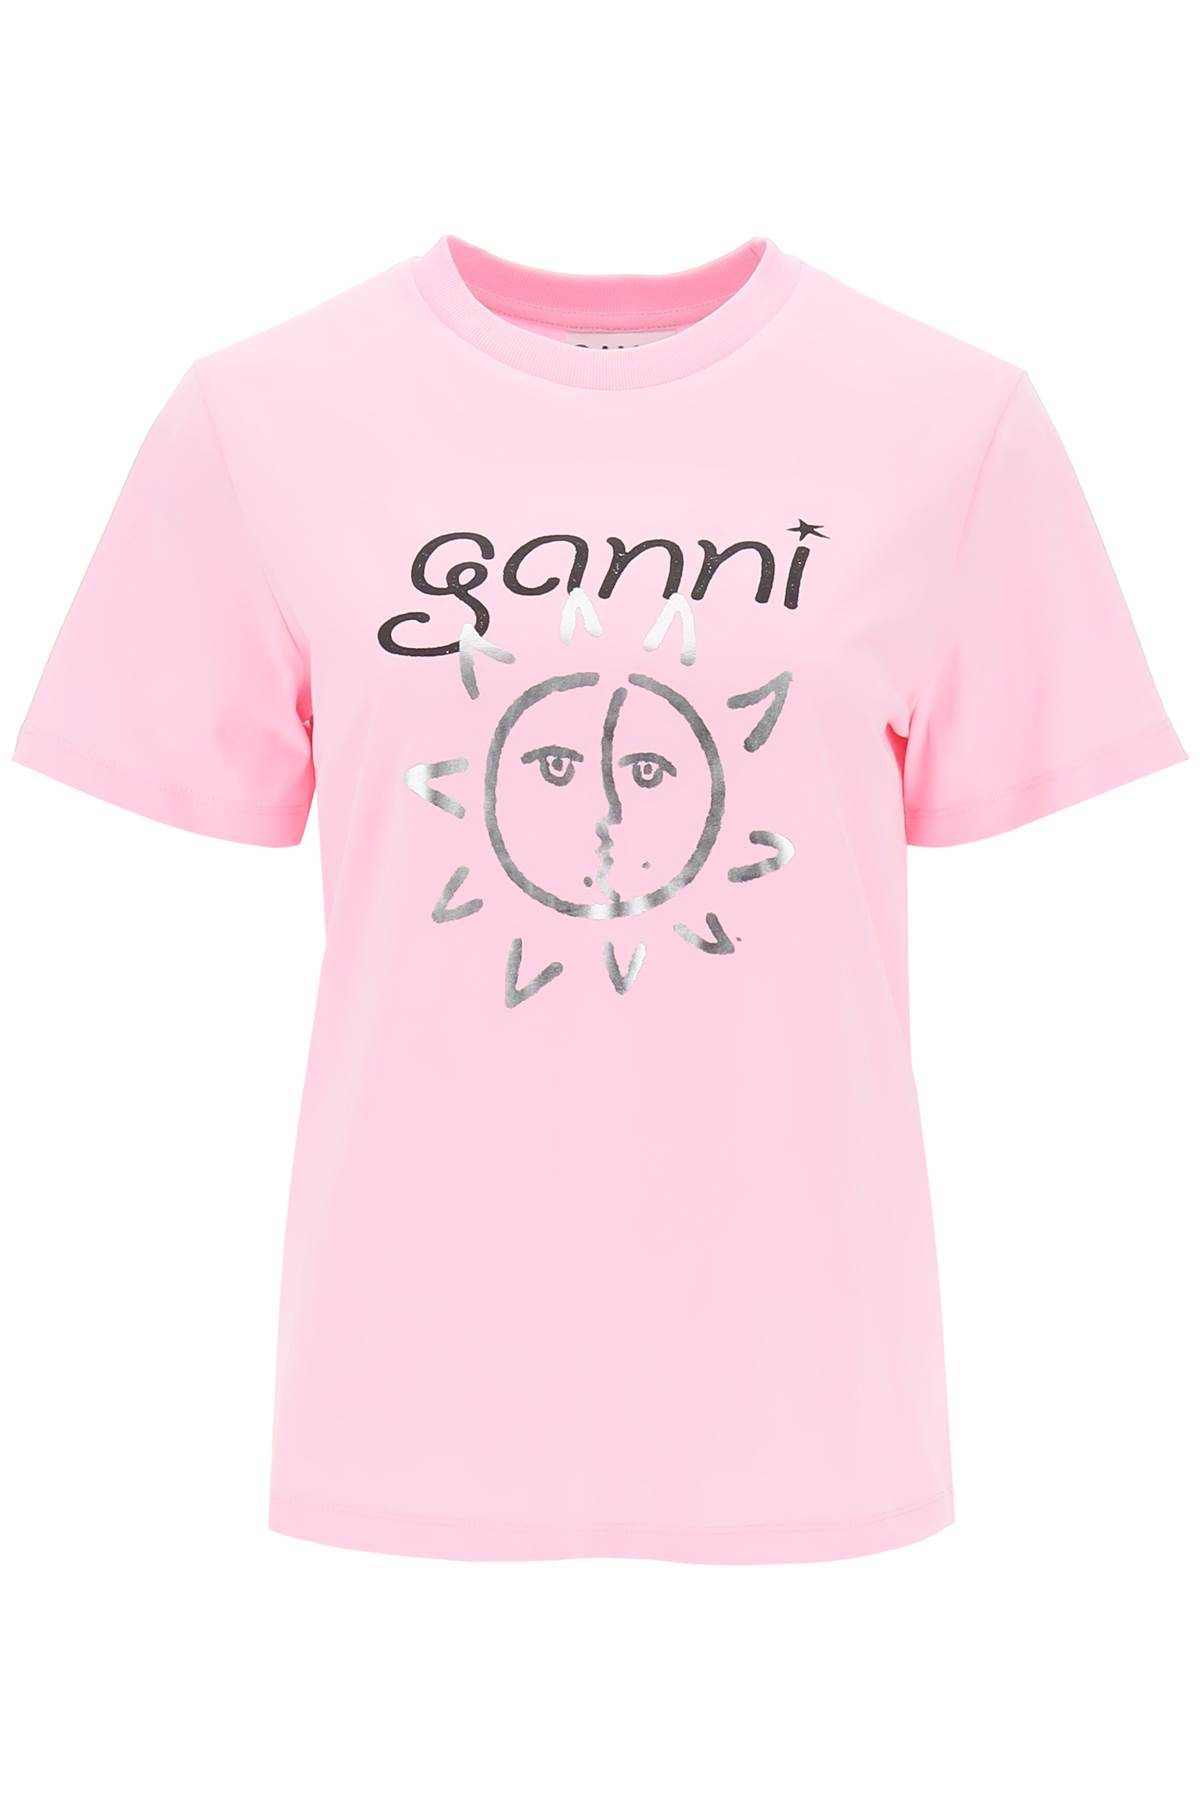 Ganni GANNI crew-neck t-shirt with print